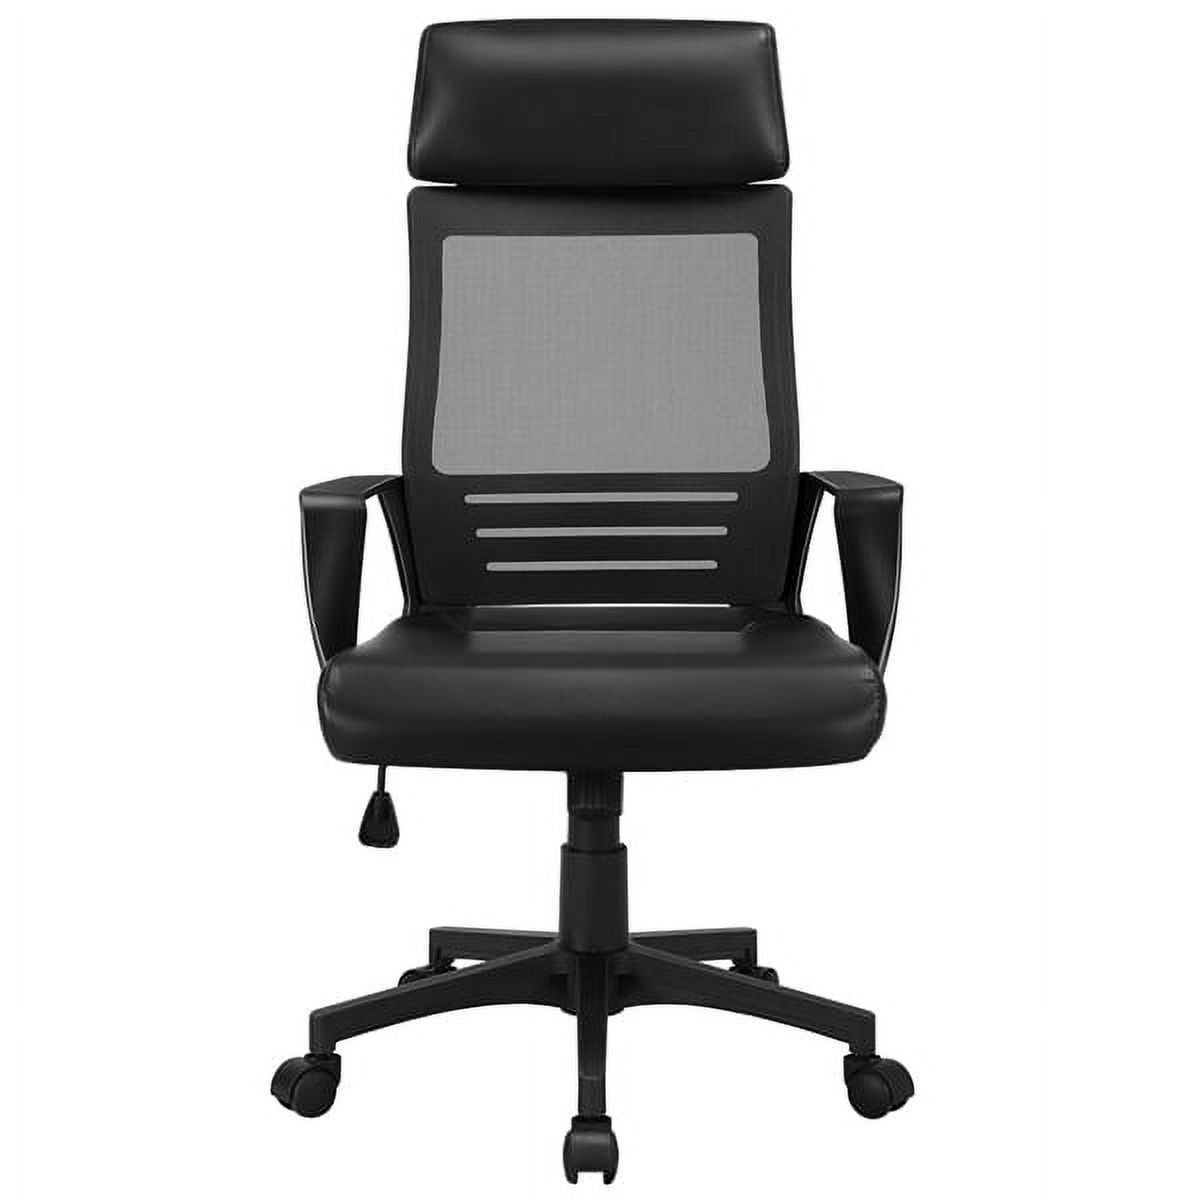 SMILE MART Adjustable Ergonomic Mesh Office Chair Swivel Computer Chair, Black - image 1 of 15